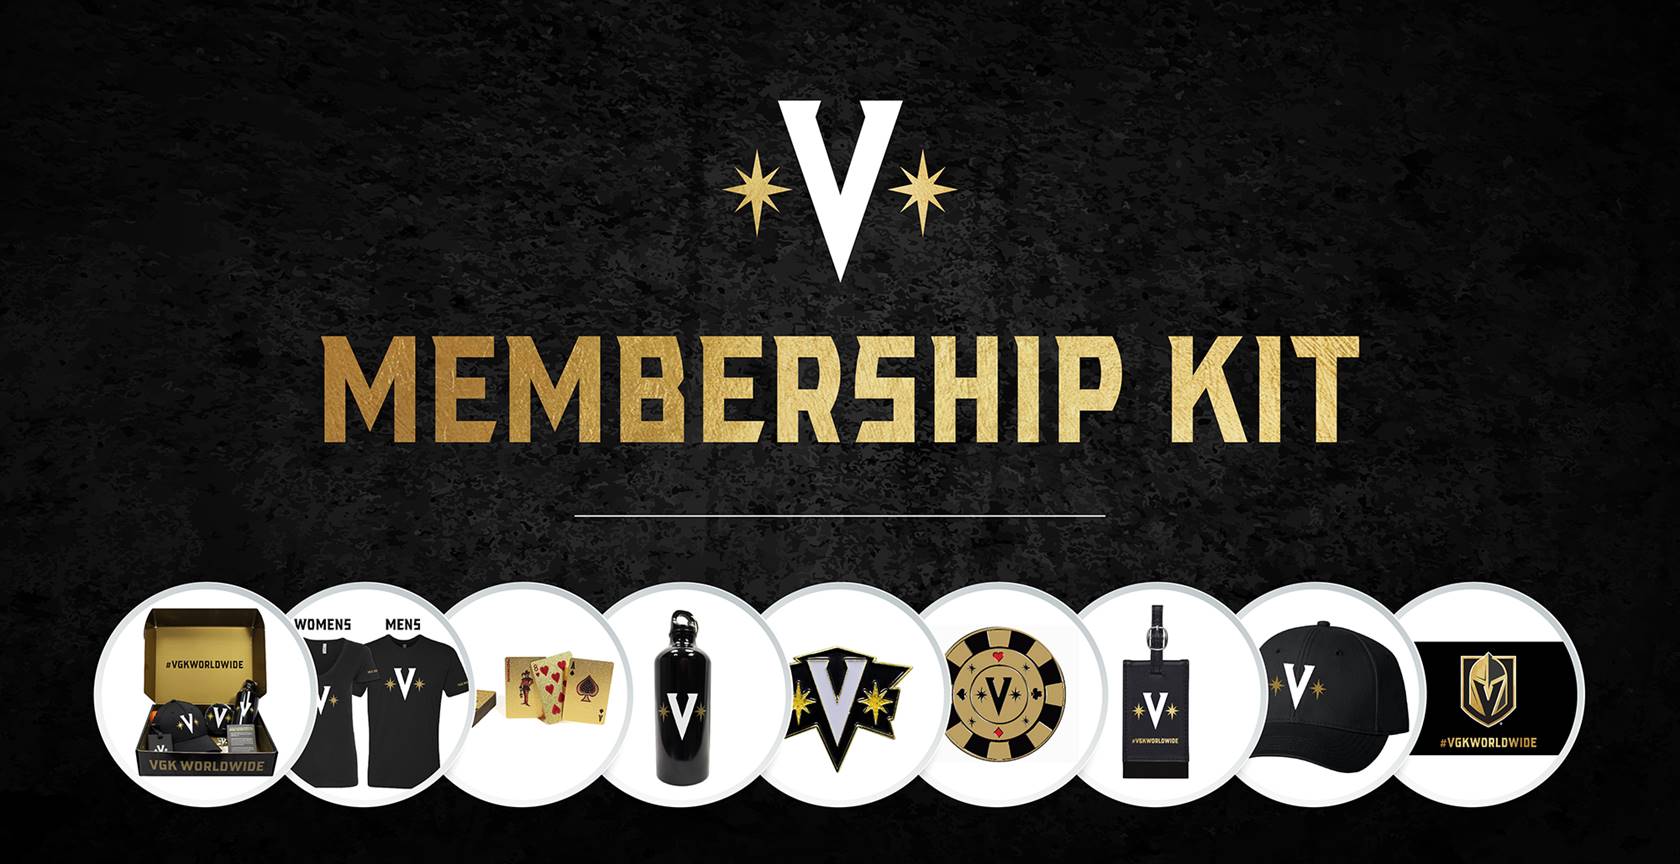 VGK Worldwide: Global online community unites Golden Knights fans  everywhere